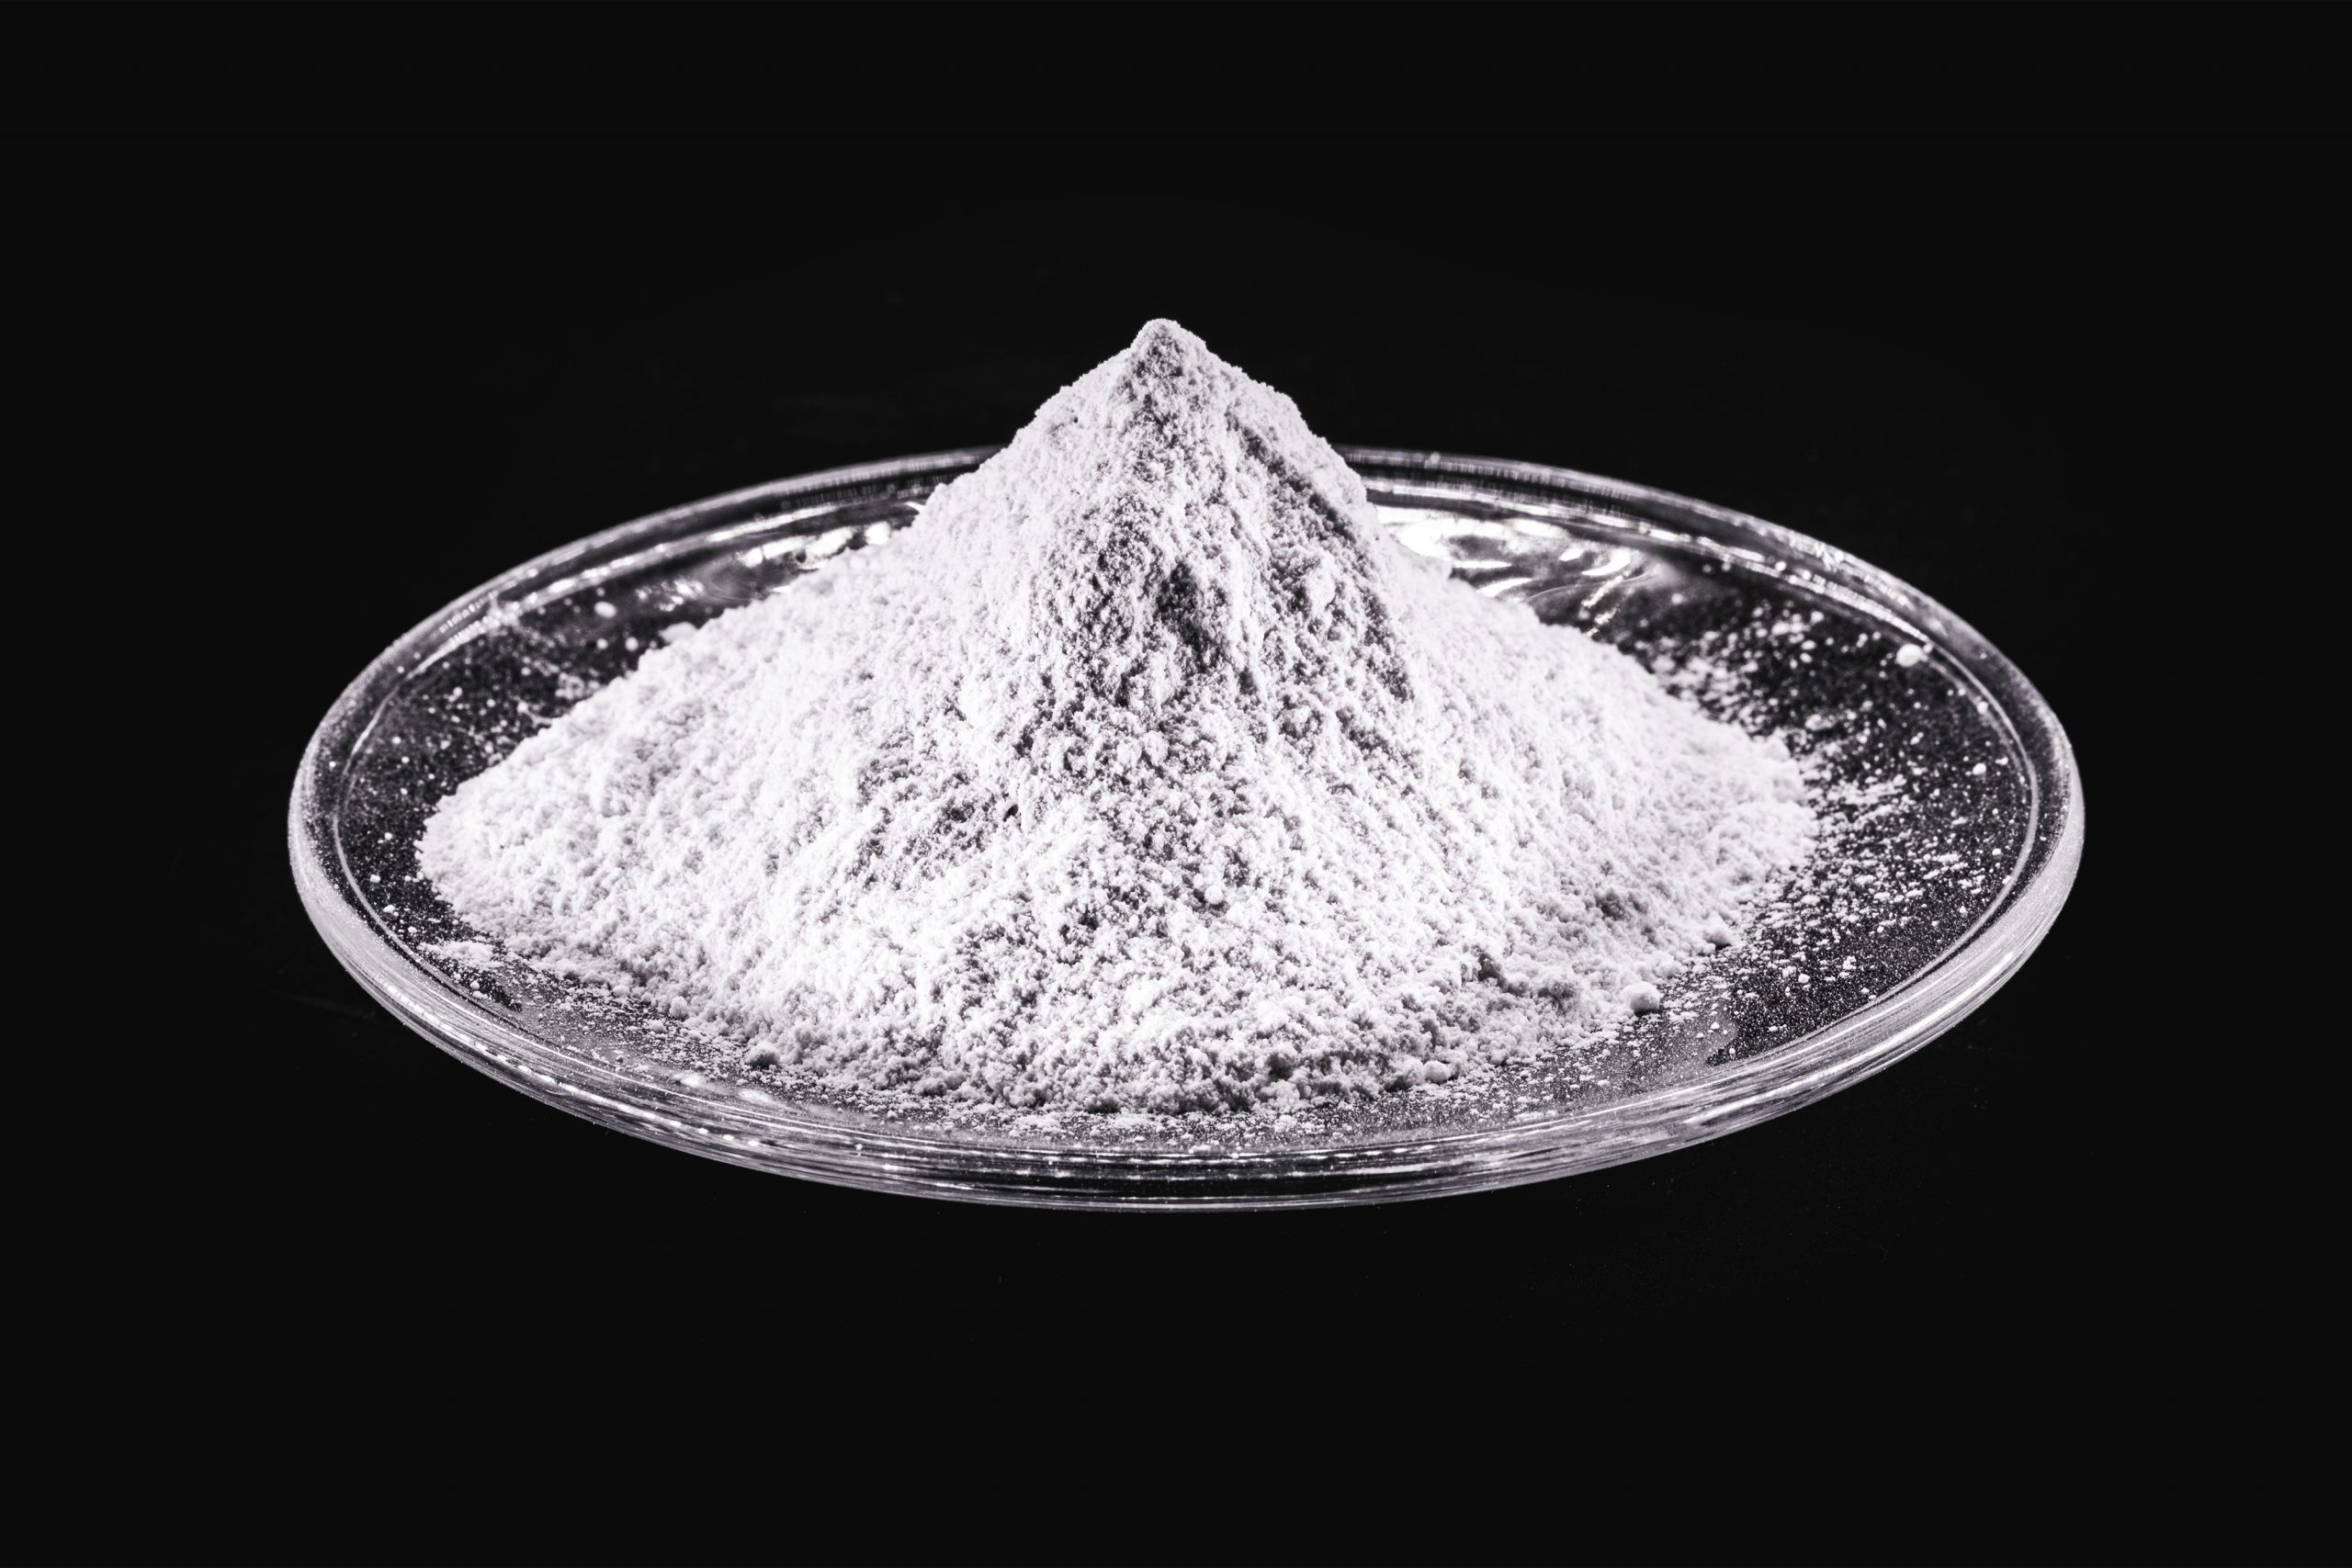 A pile of powdered phosphorus.